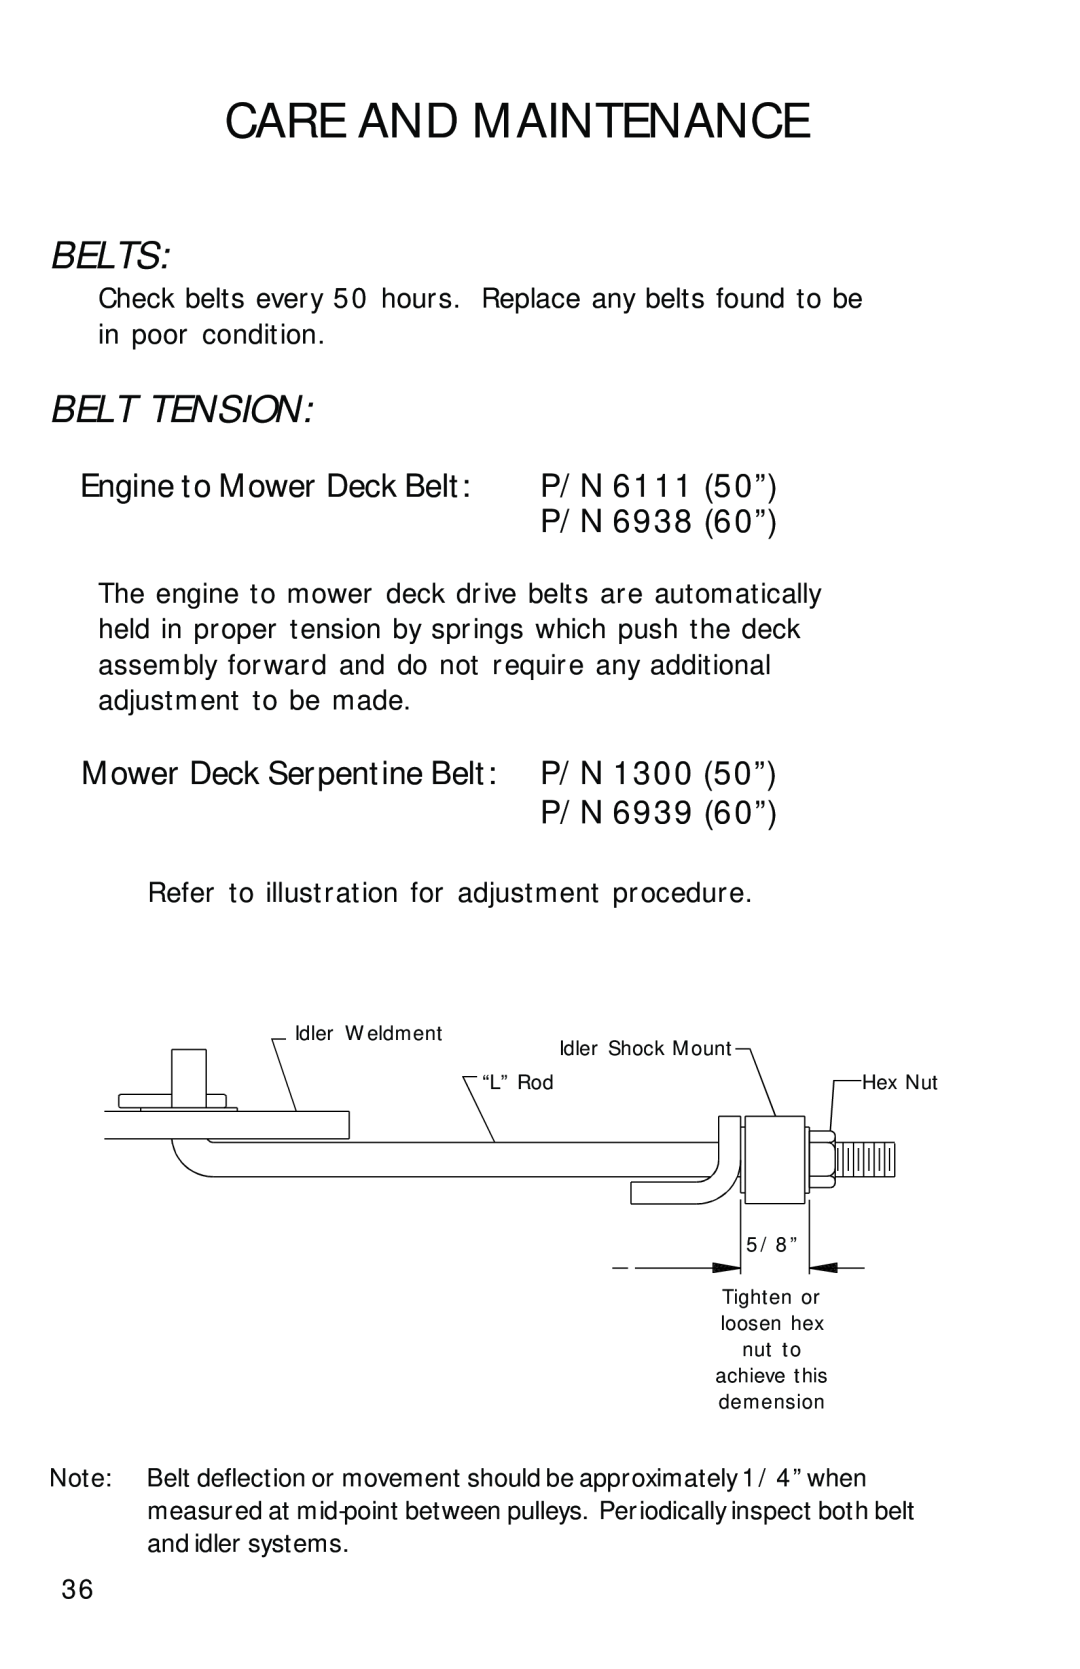 Dixon 1950-2300 Series Belts, Belt Tension, Engine to Mower Deck Belt, P/N 6111 50”, P/N 6938 60”, Care And Maintenance 